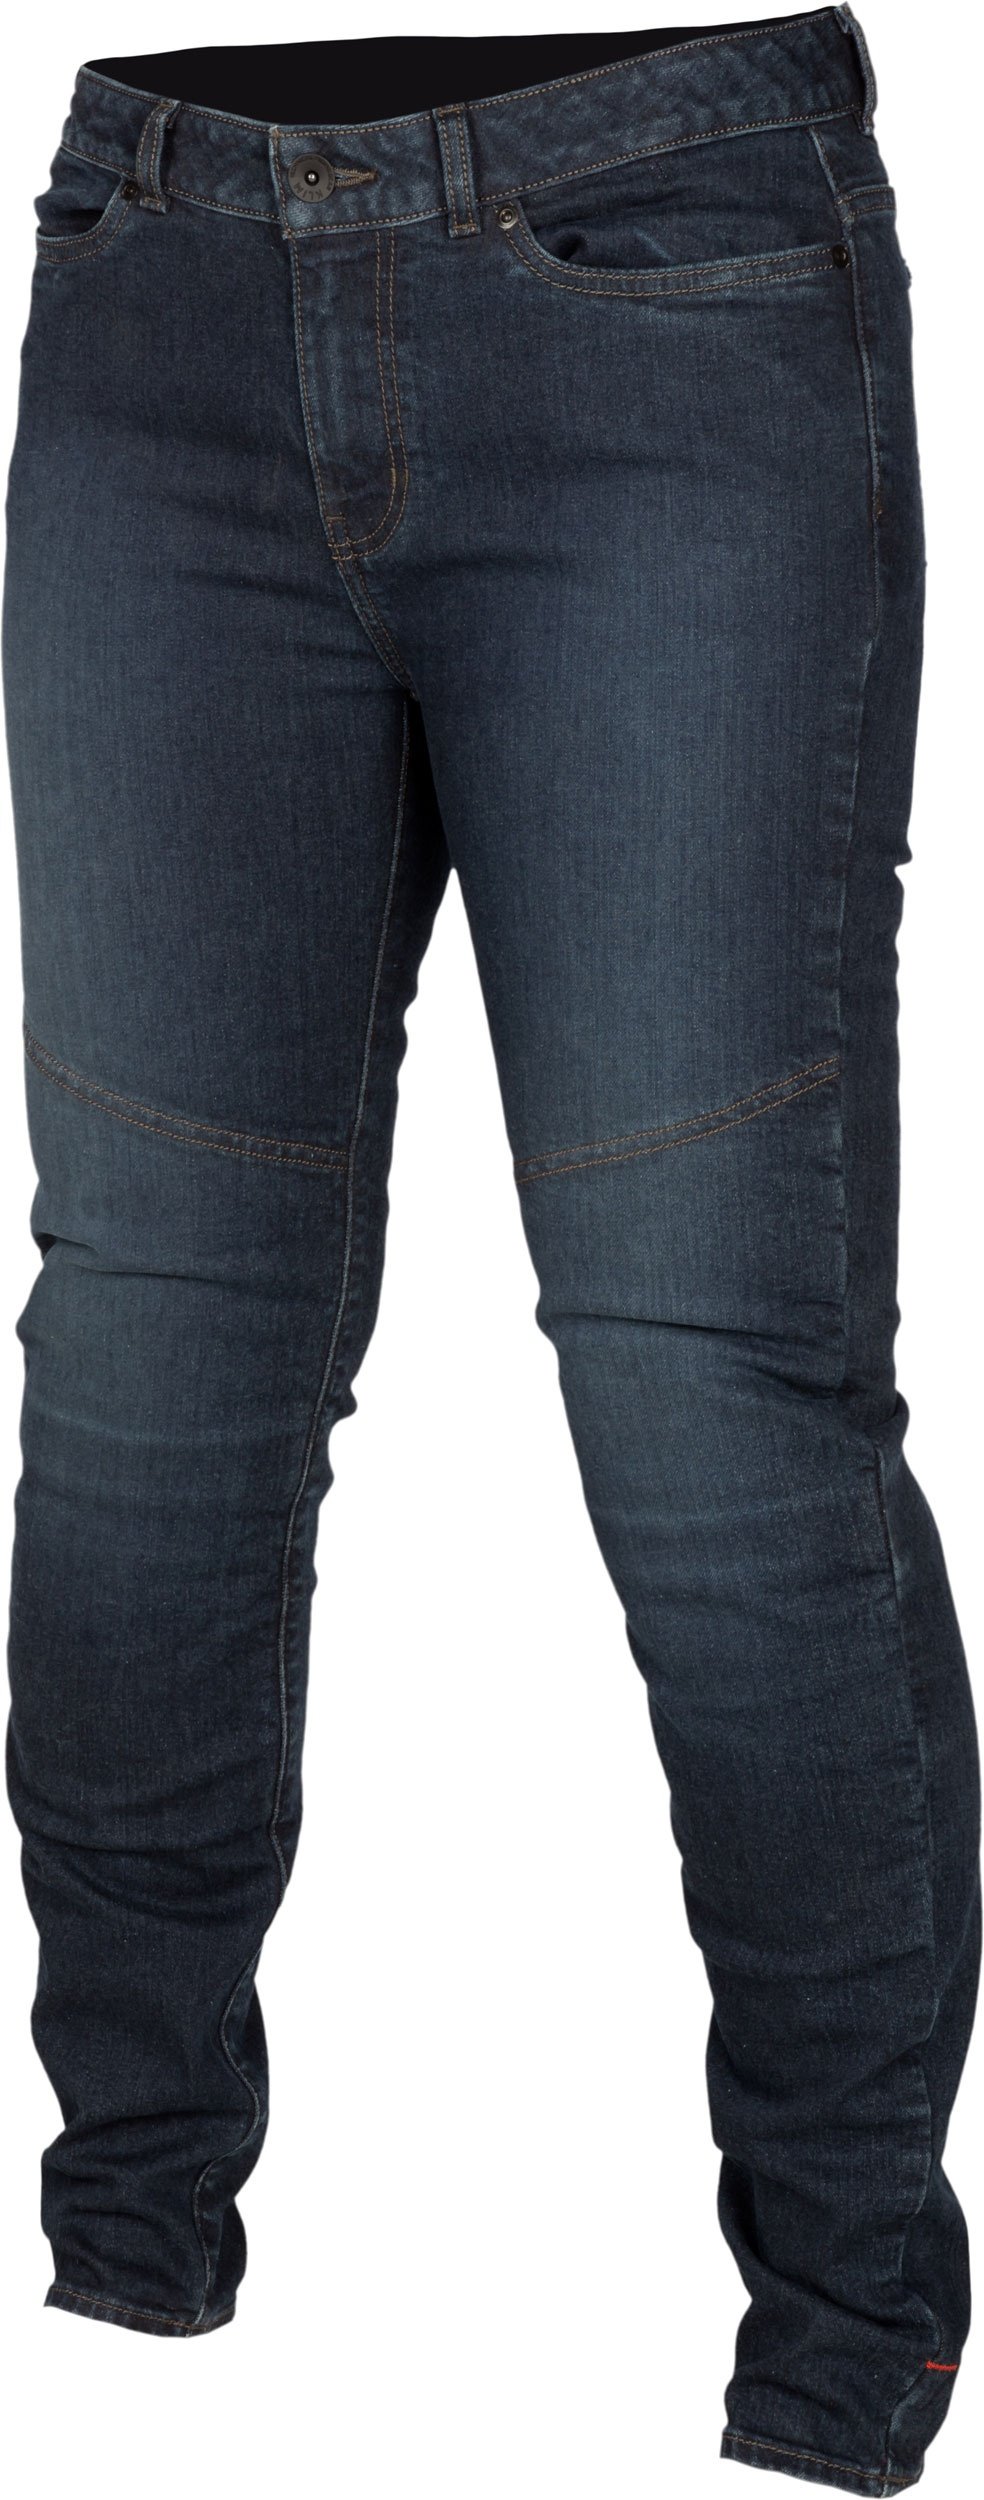 Klim Betty Tapered Stretch Denim, jeans femmes - Bleu Foncé - 2